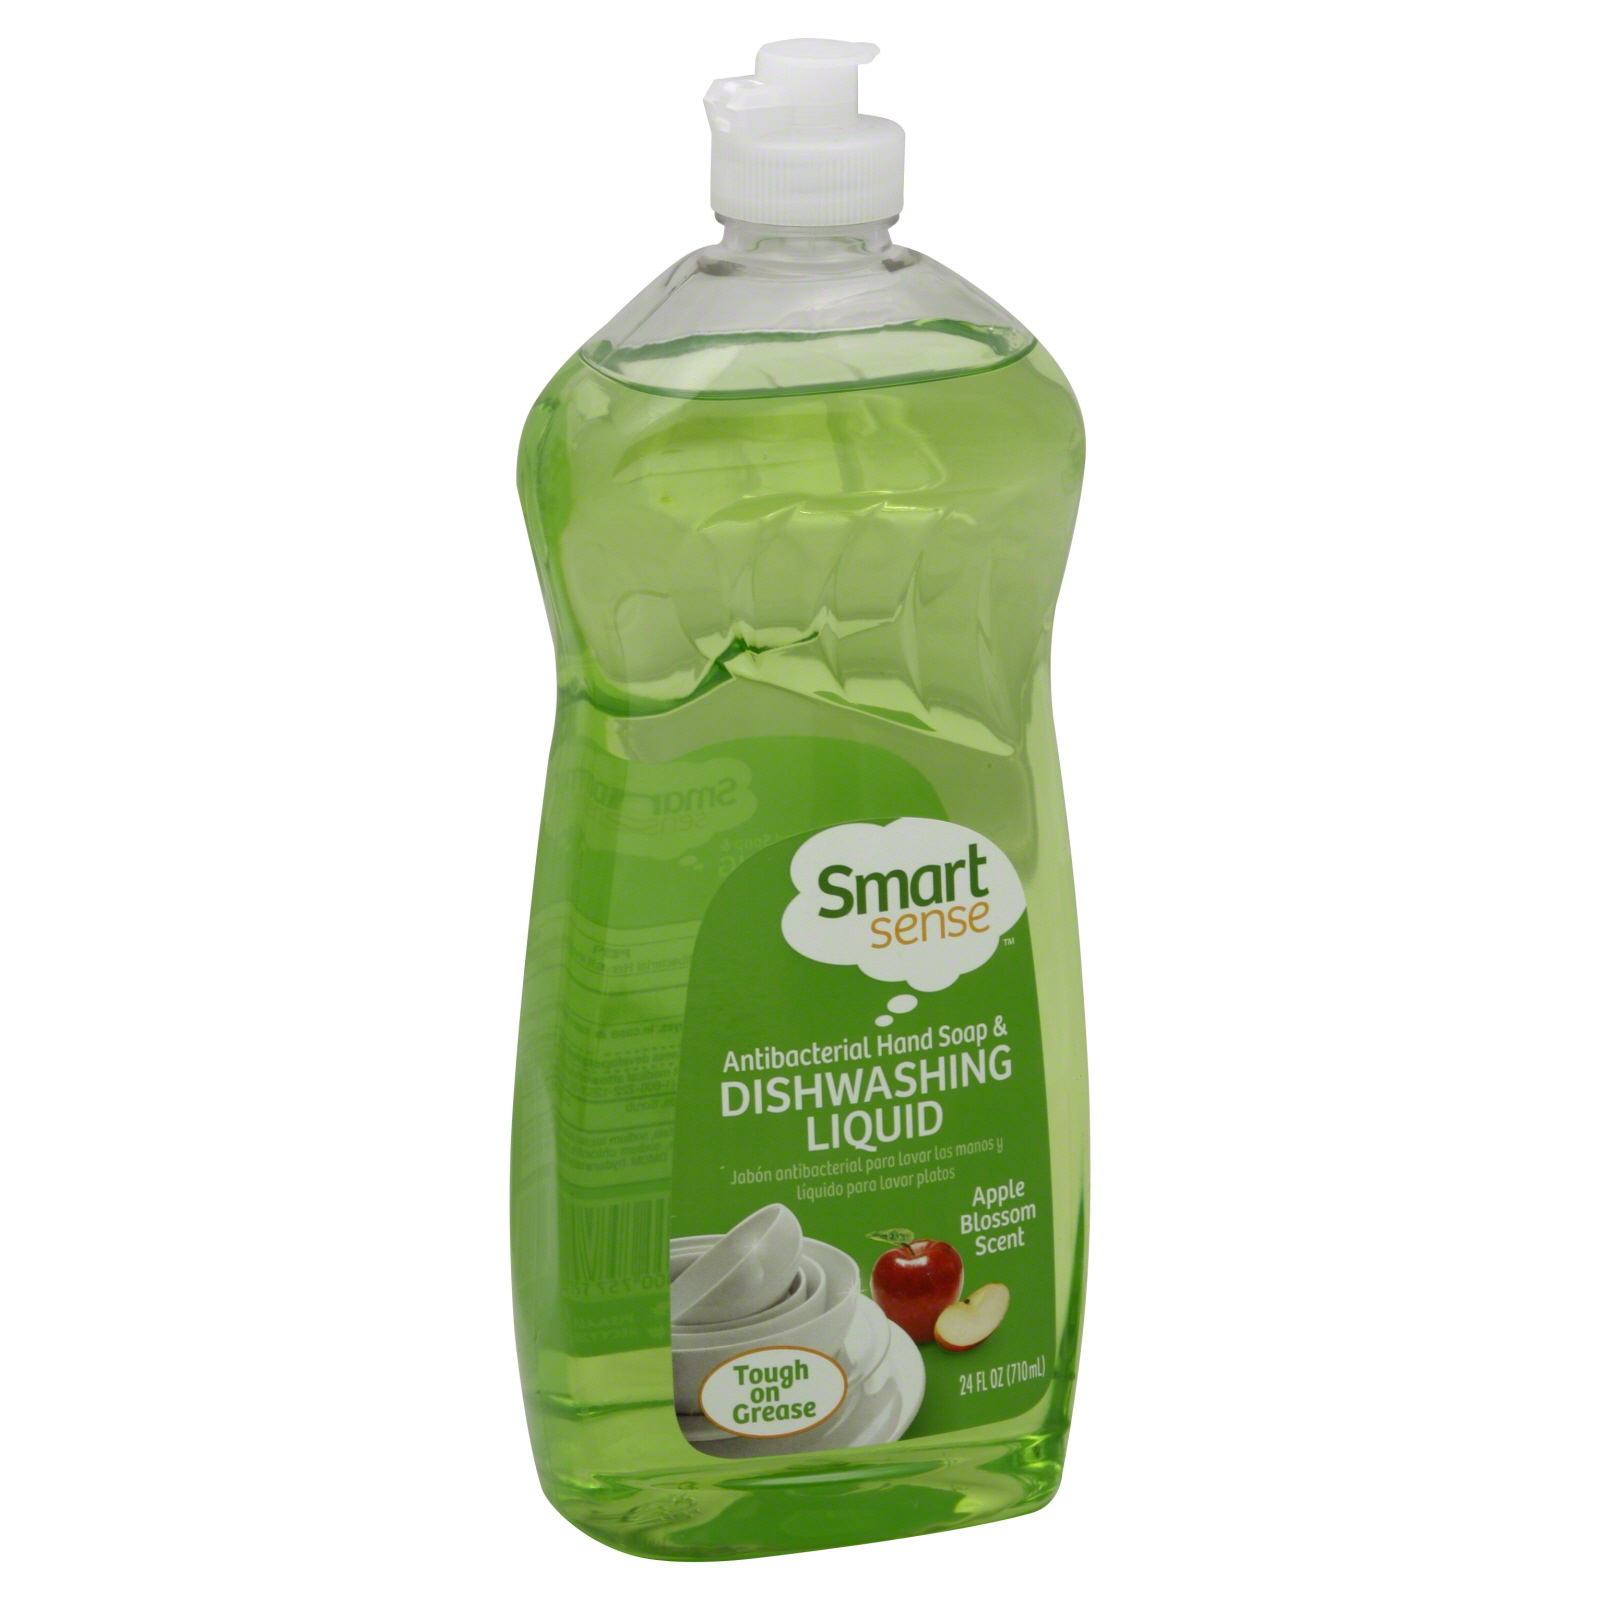 Smart Sense Antibacterial Dishwashing Liquid, Apple Blossom Scent, 24 fl oz